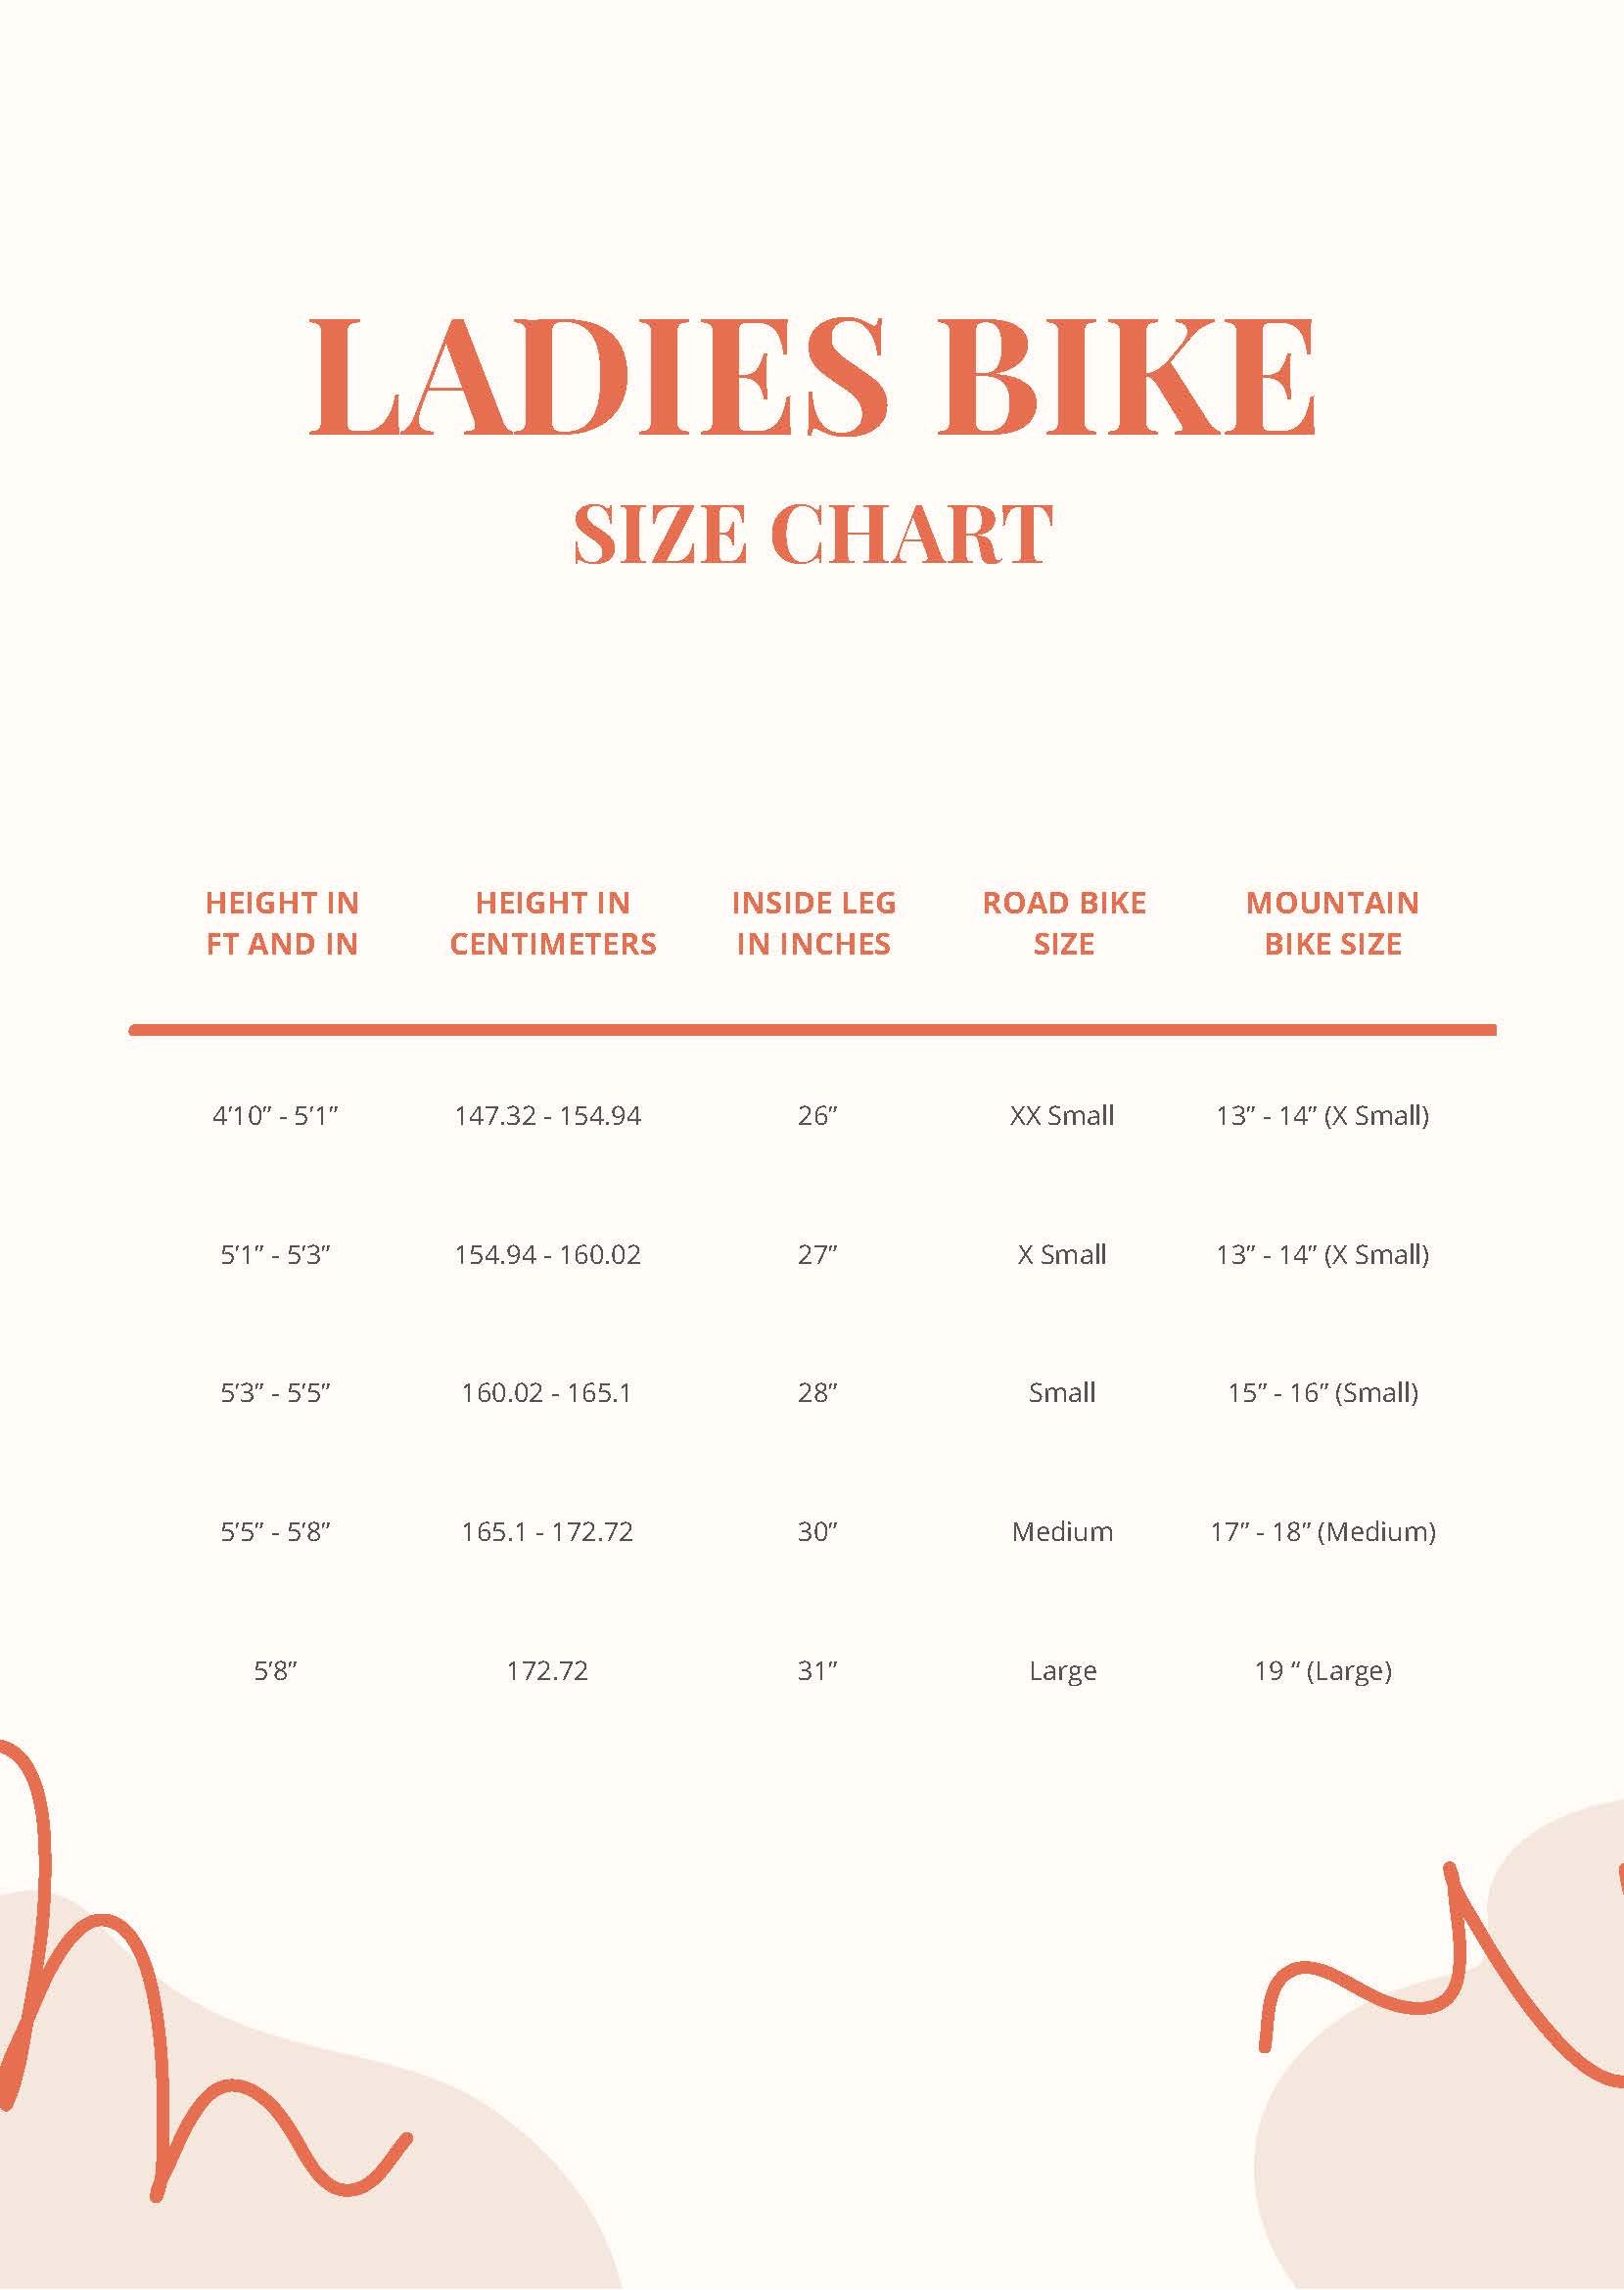 Ladies Bike Size Chart in PDF